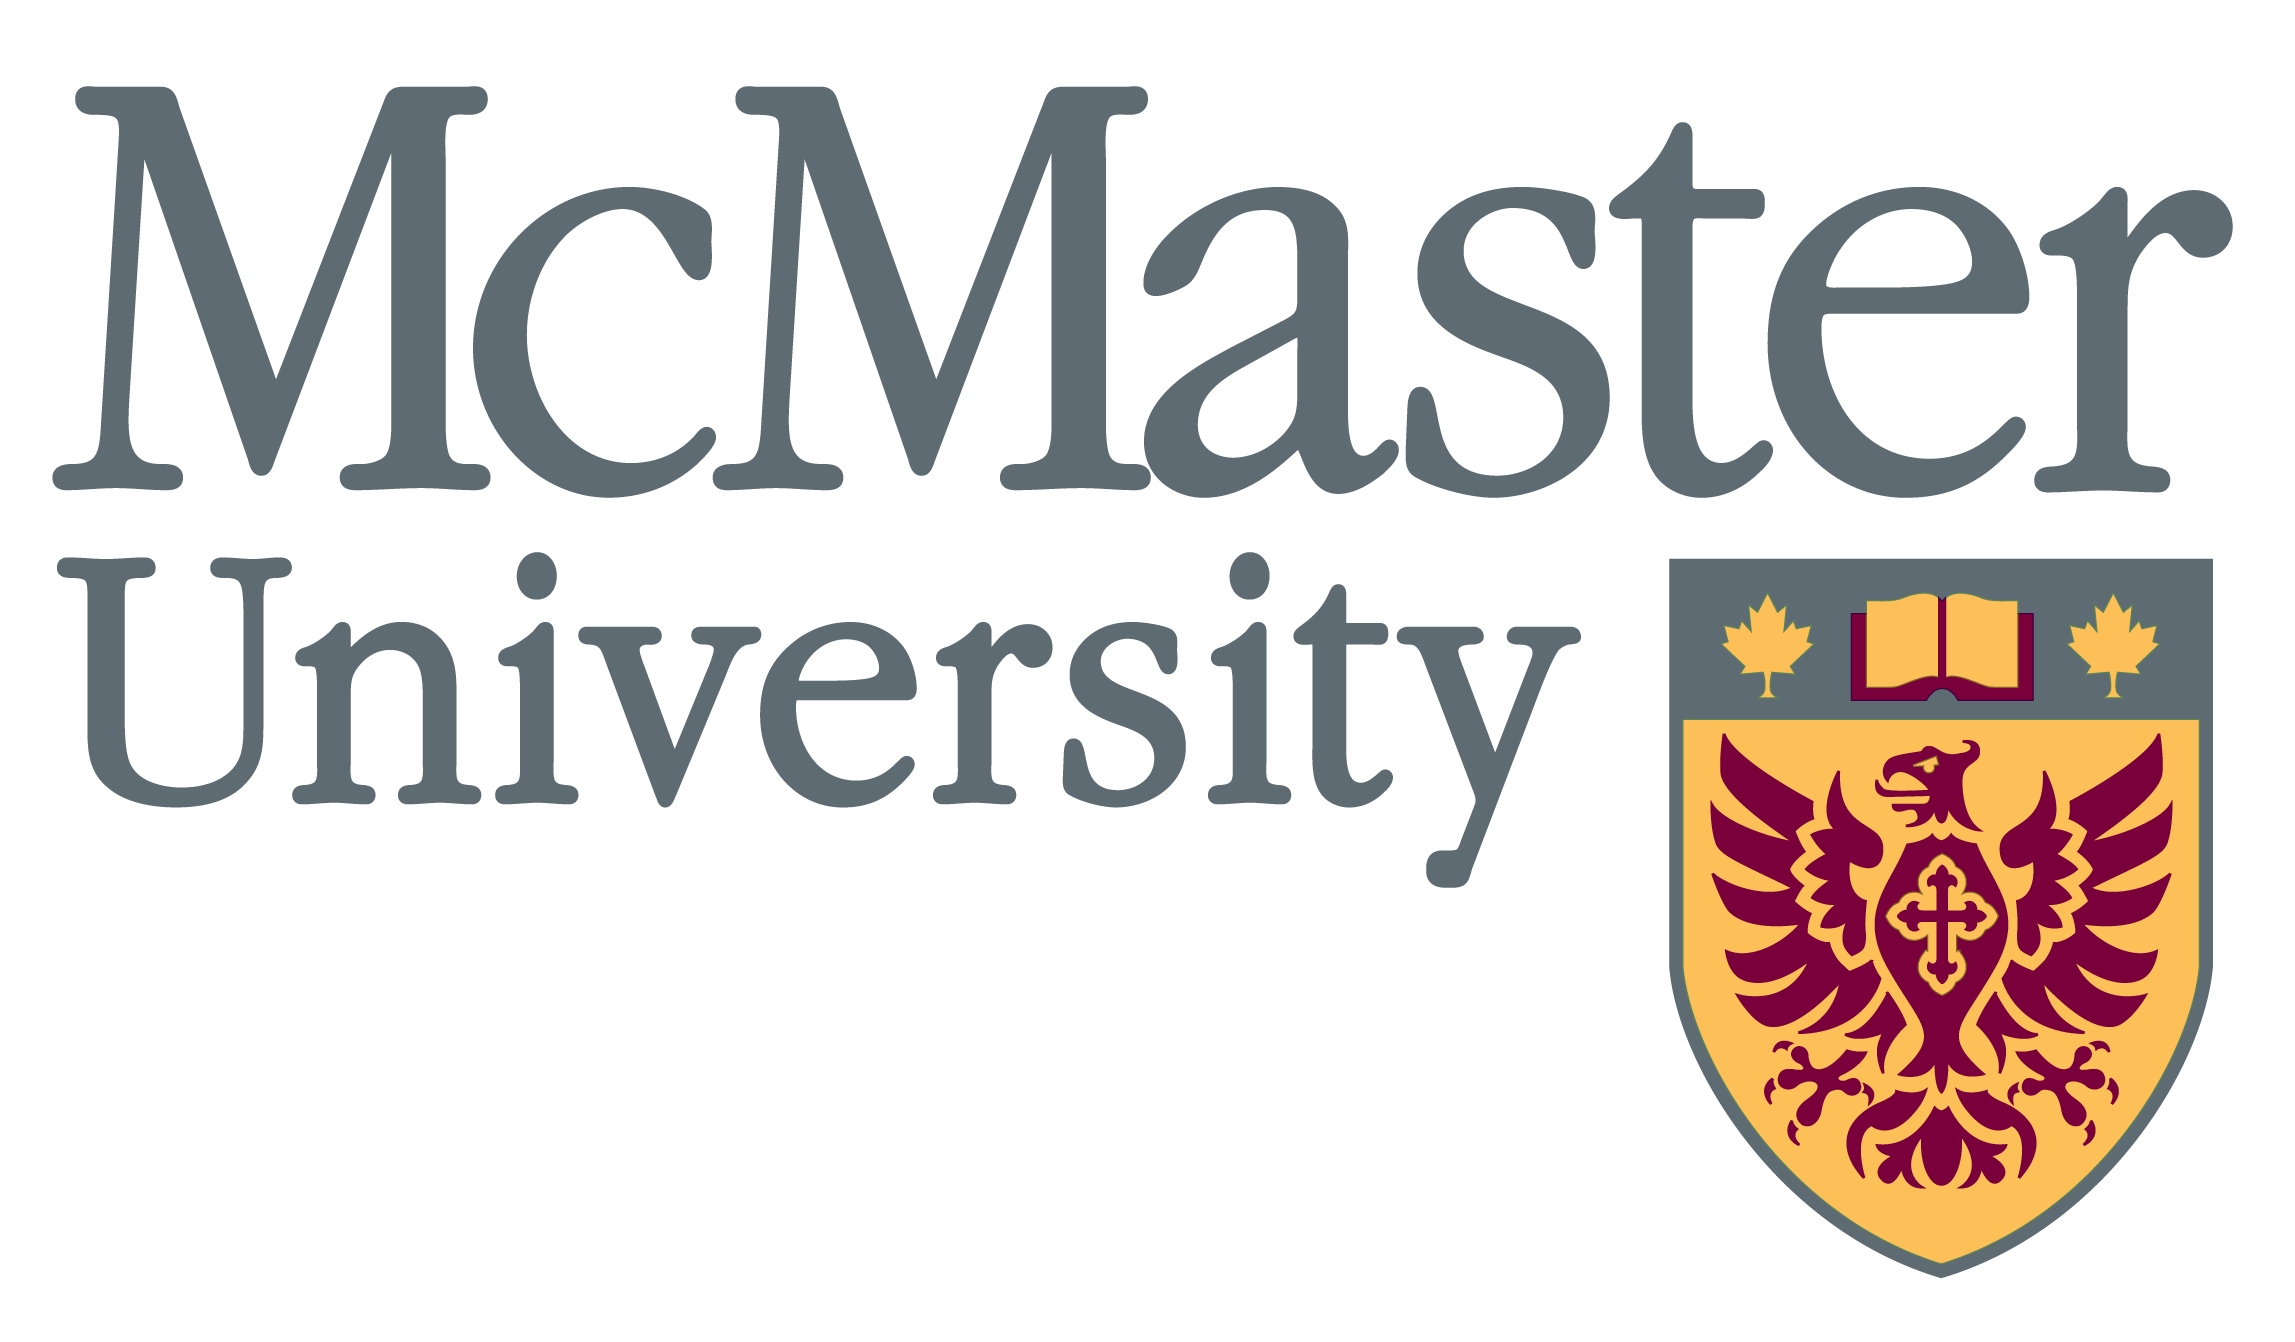 mcmaster university